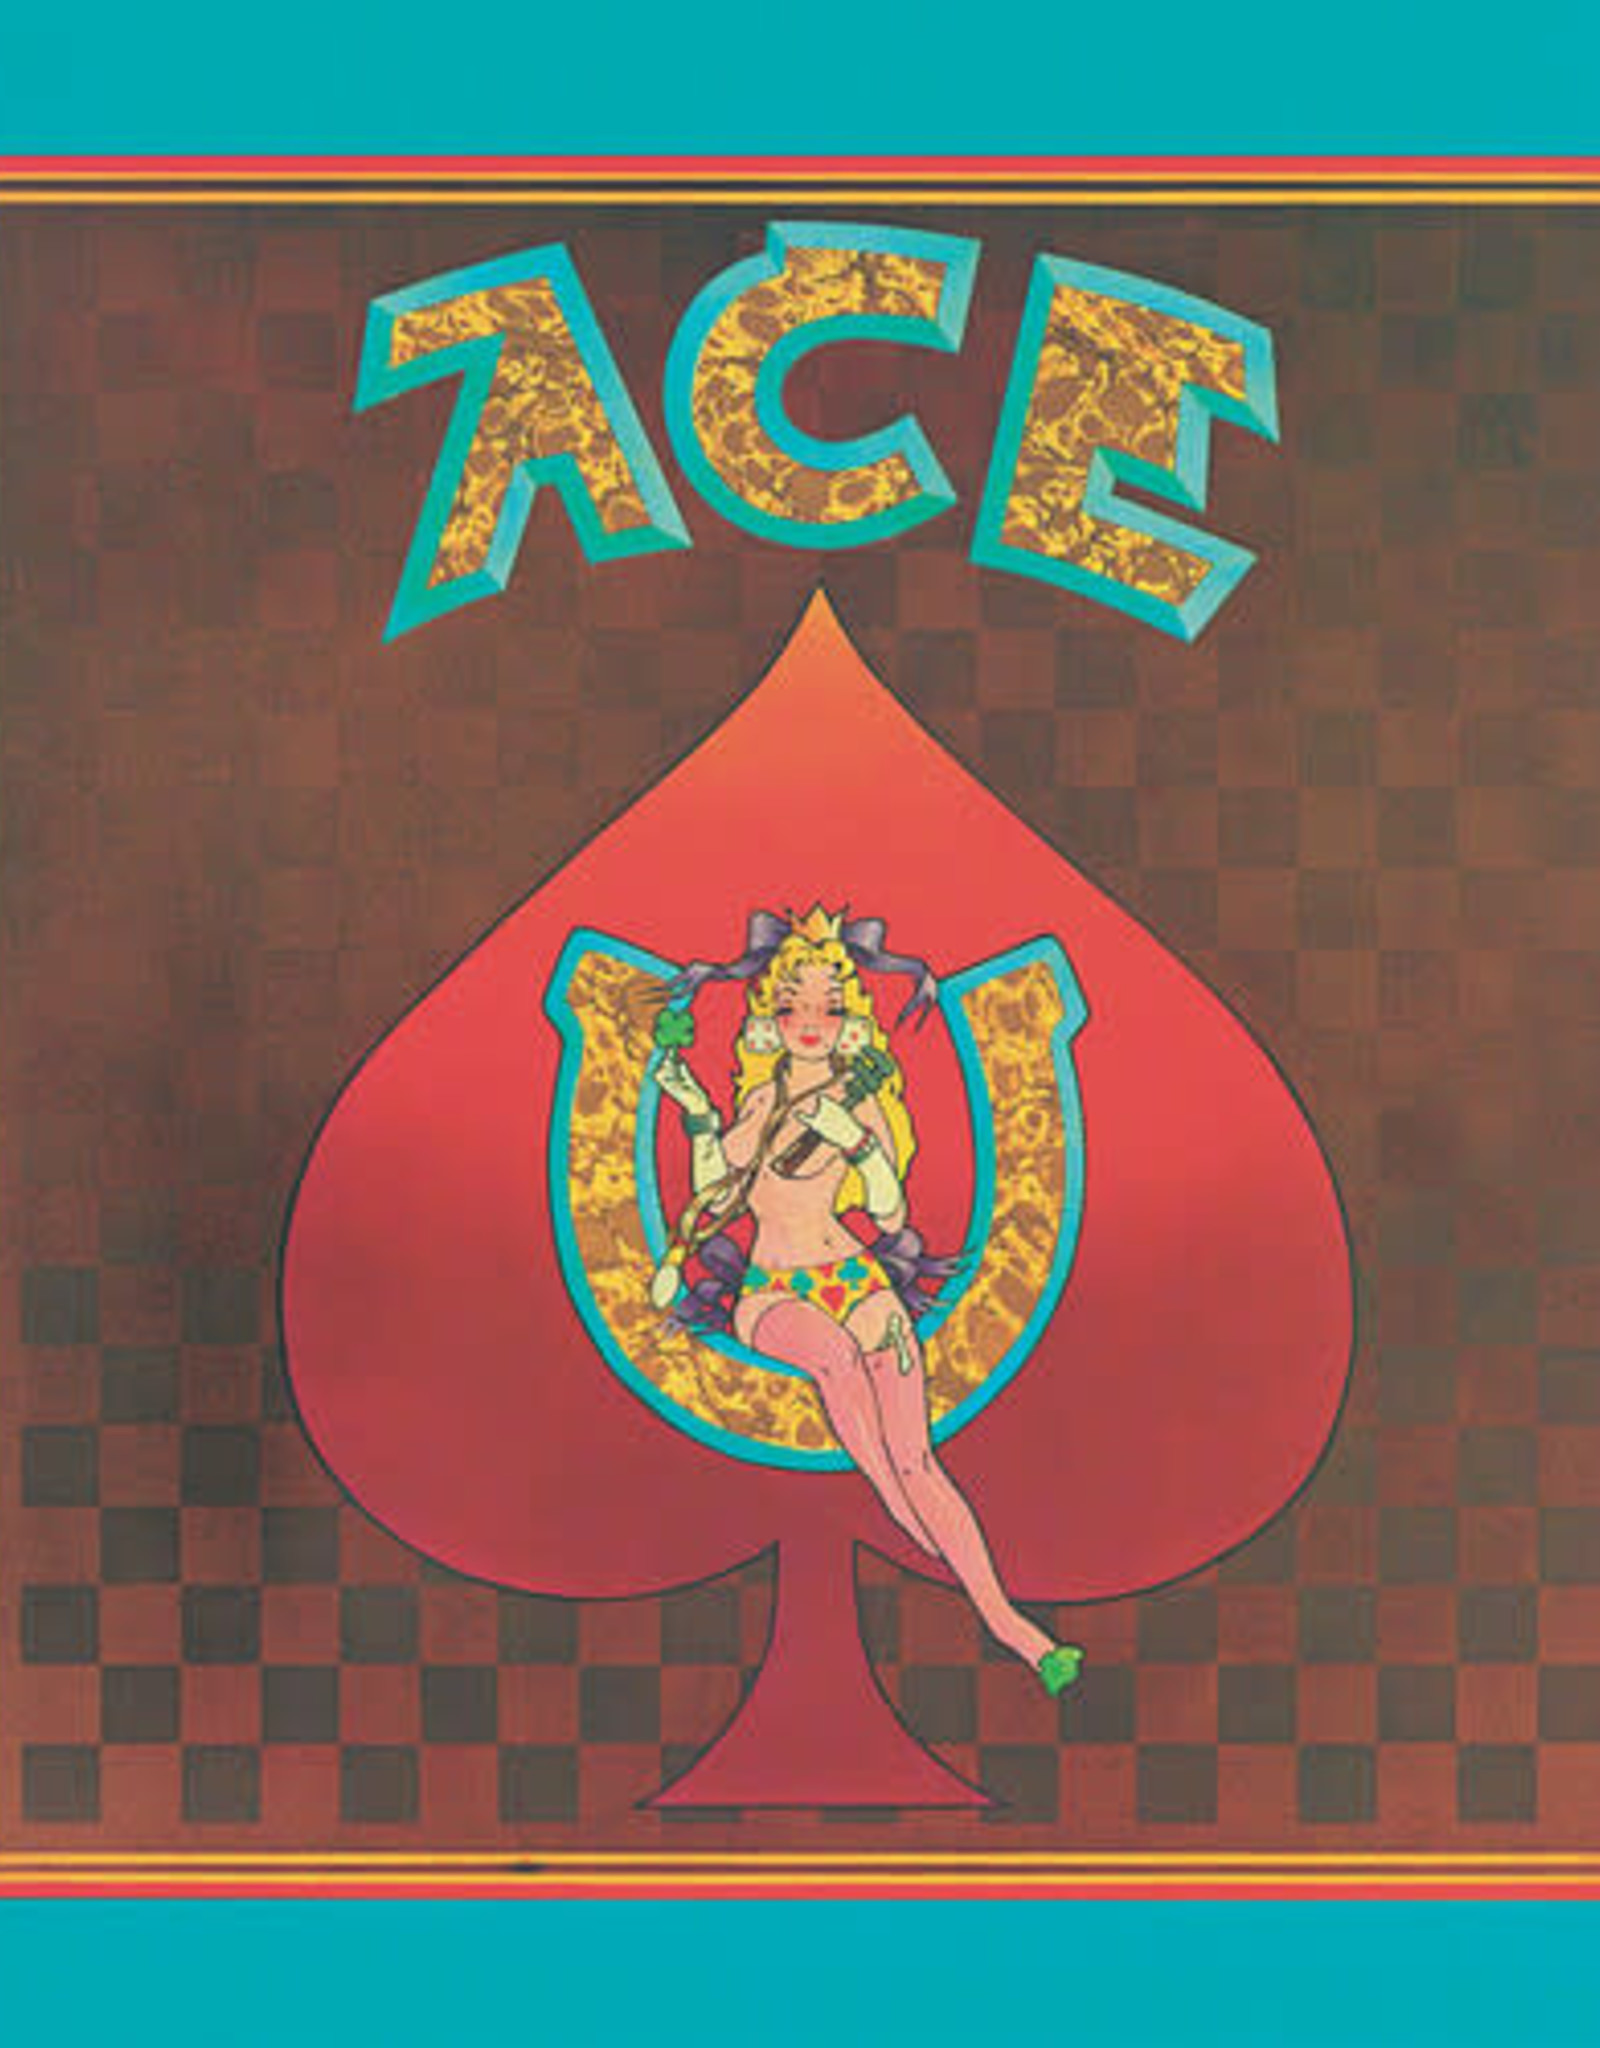 Bob Weir - Ace (50th Anniversary Red Vinyl)